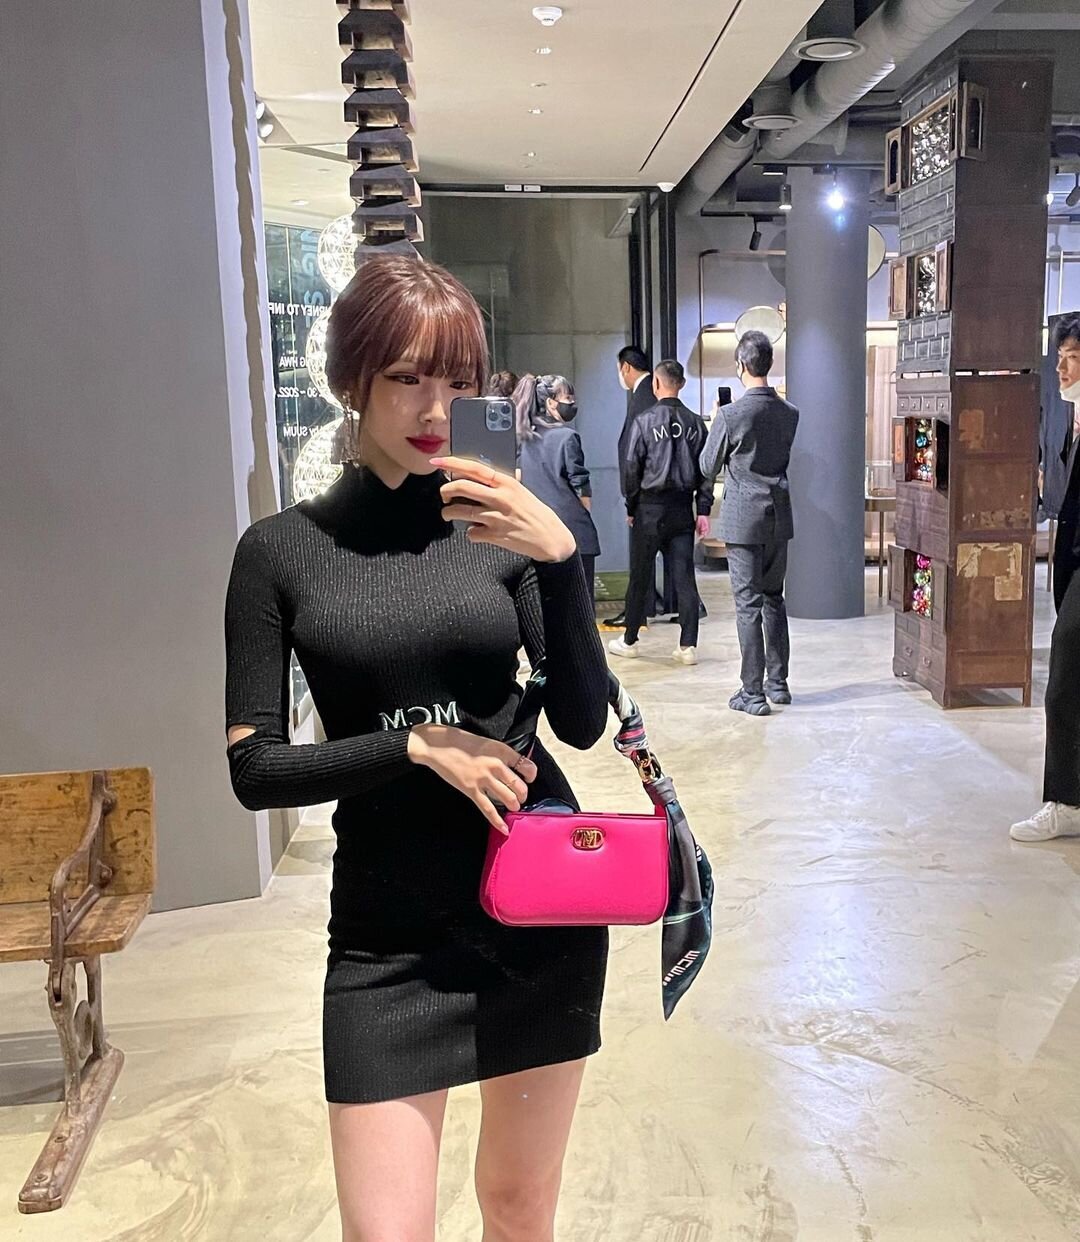 220901 Yuju Instagram Update | kpopping